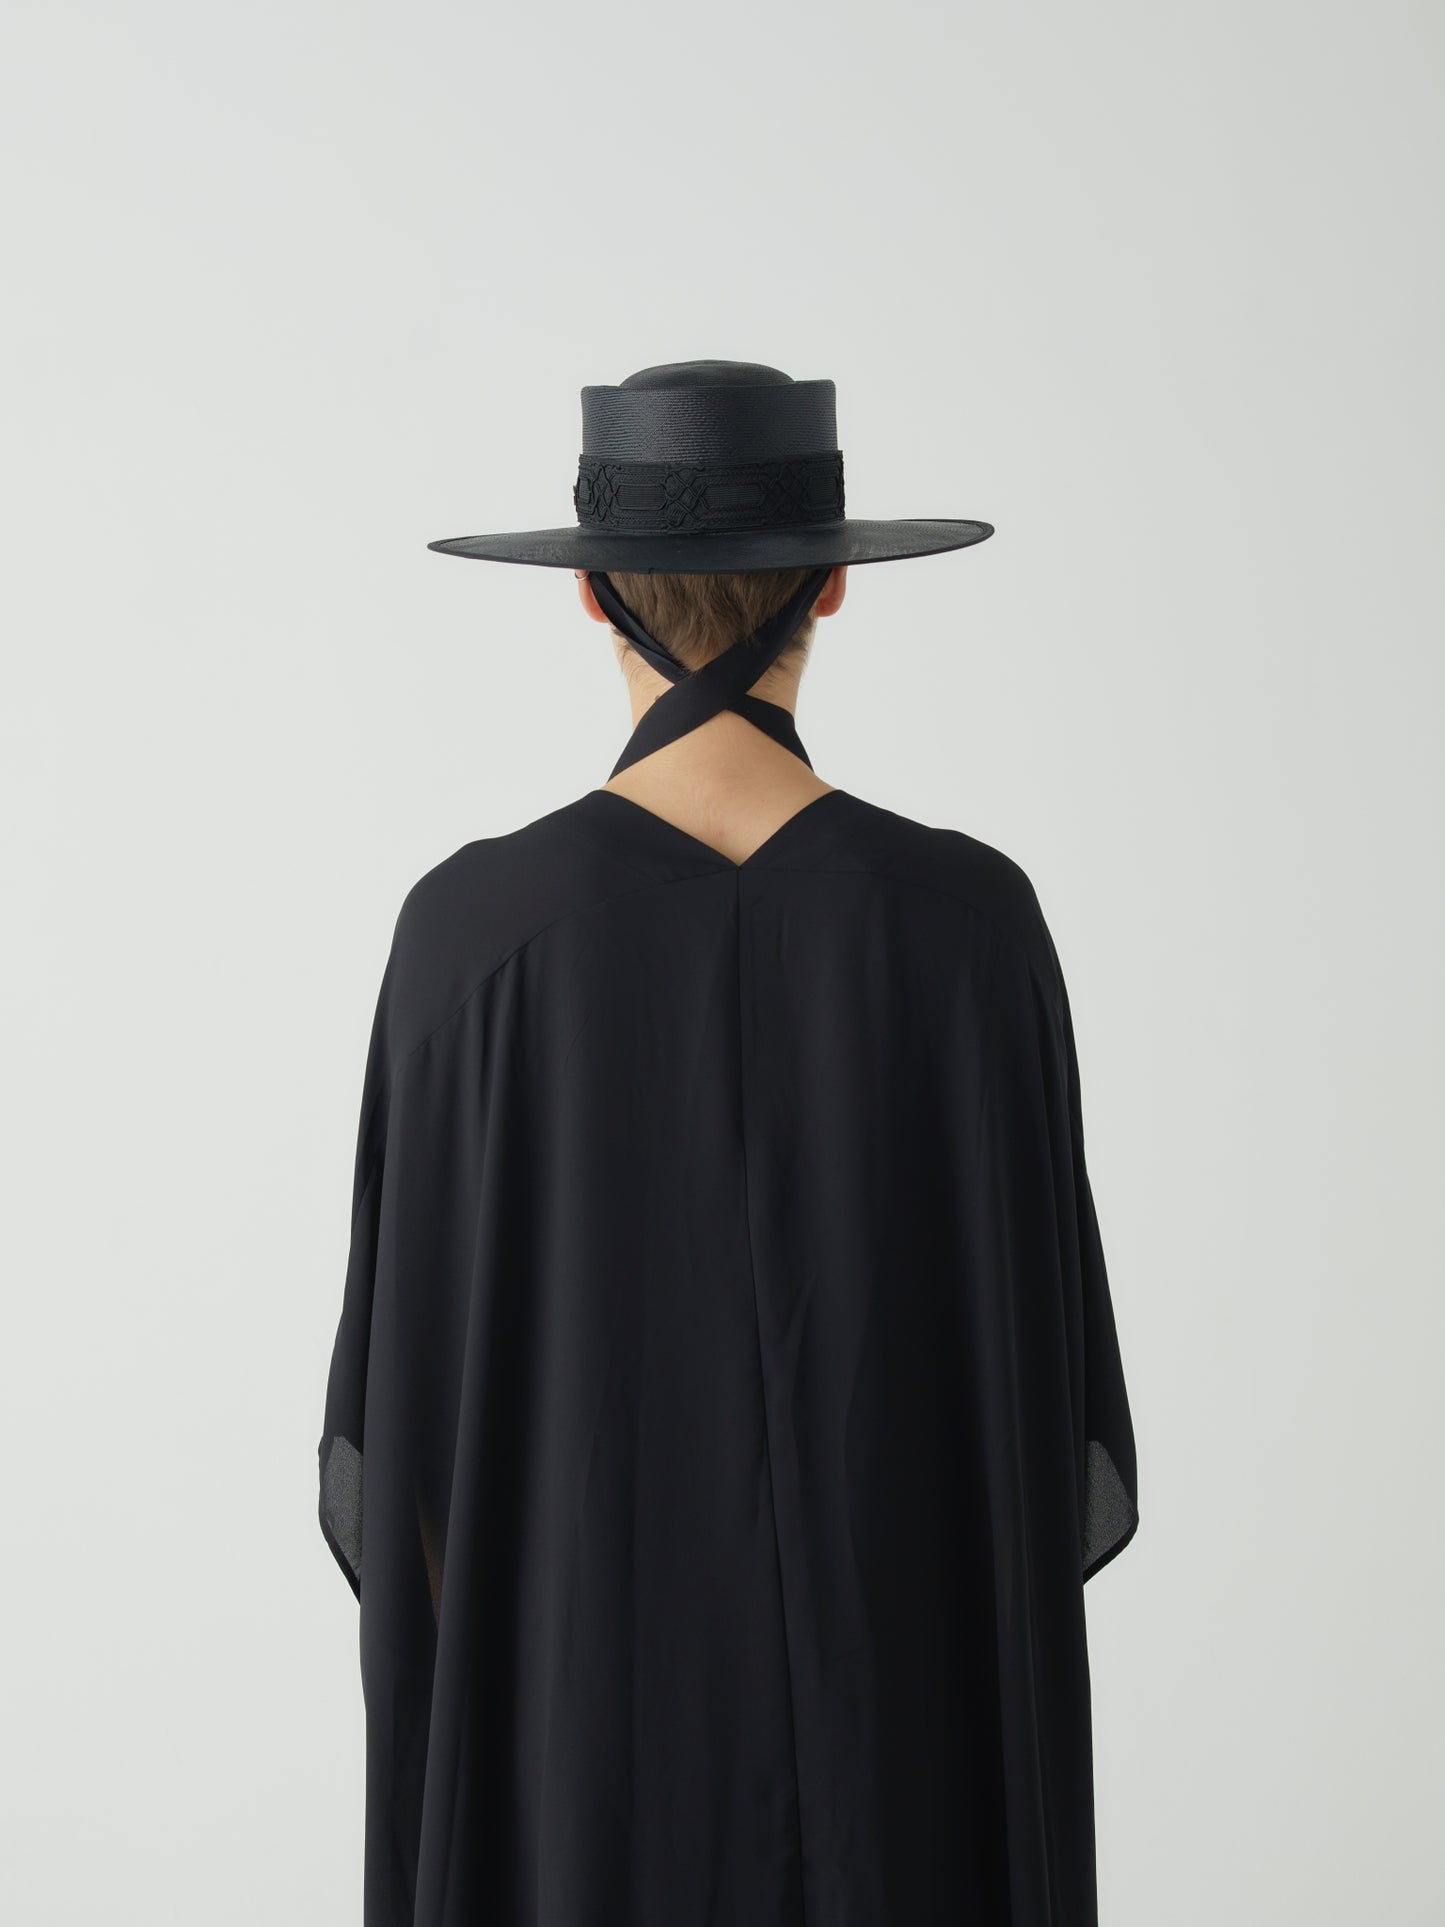 Amish hat B